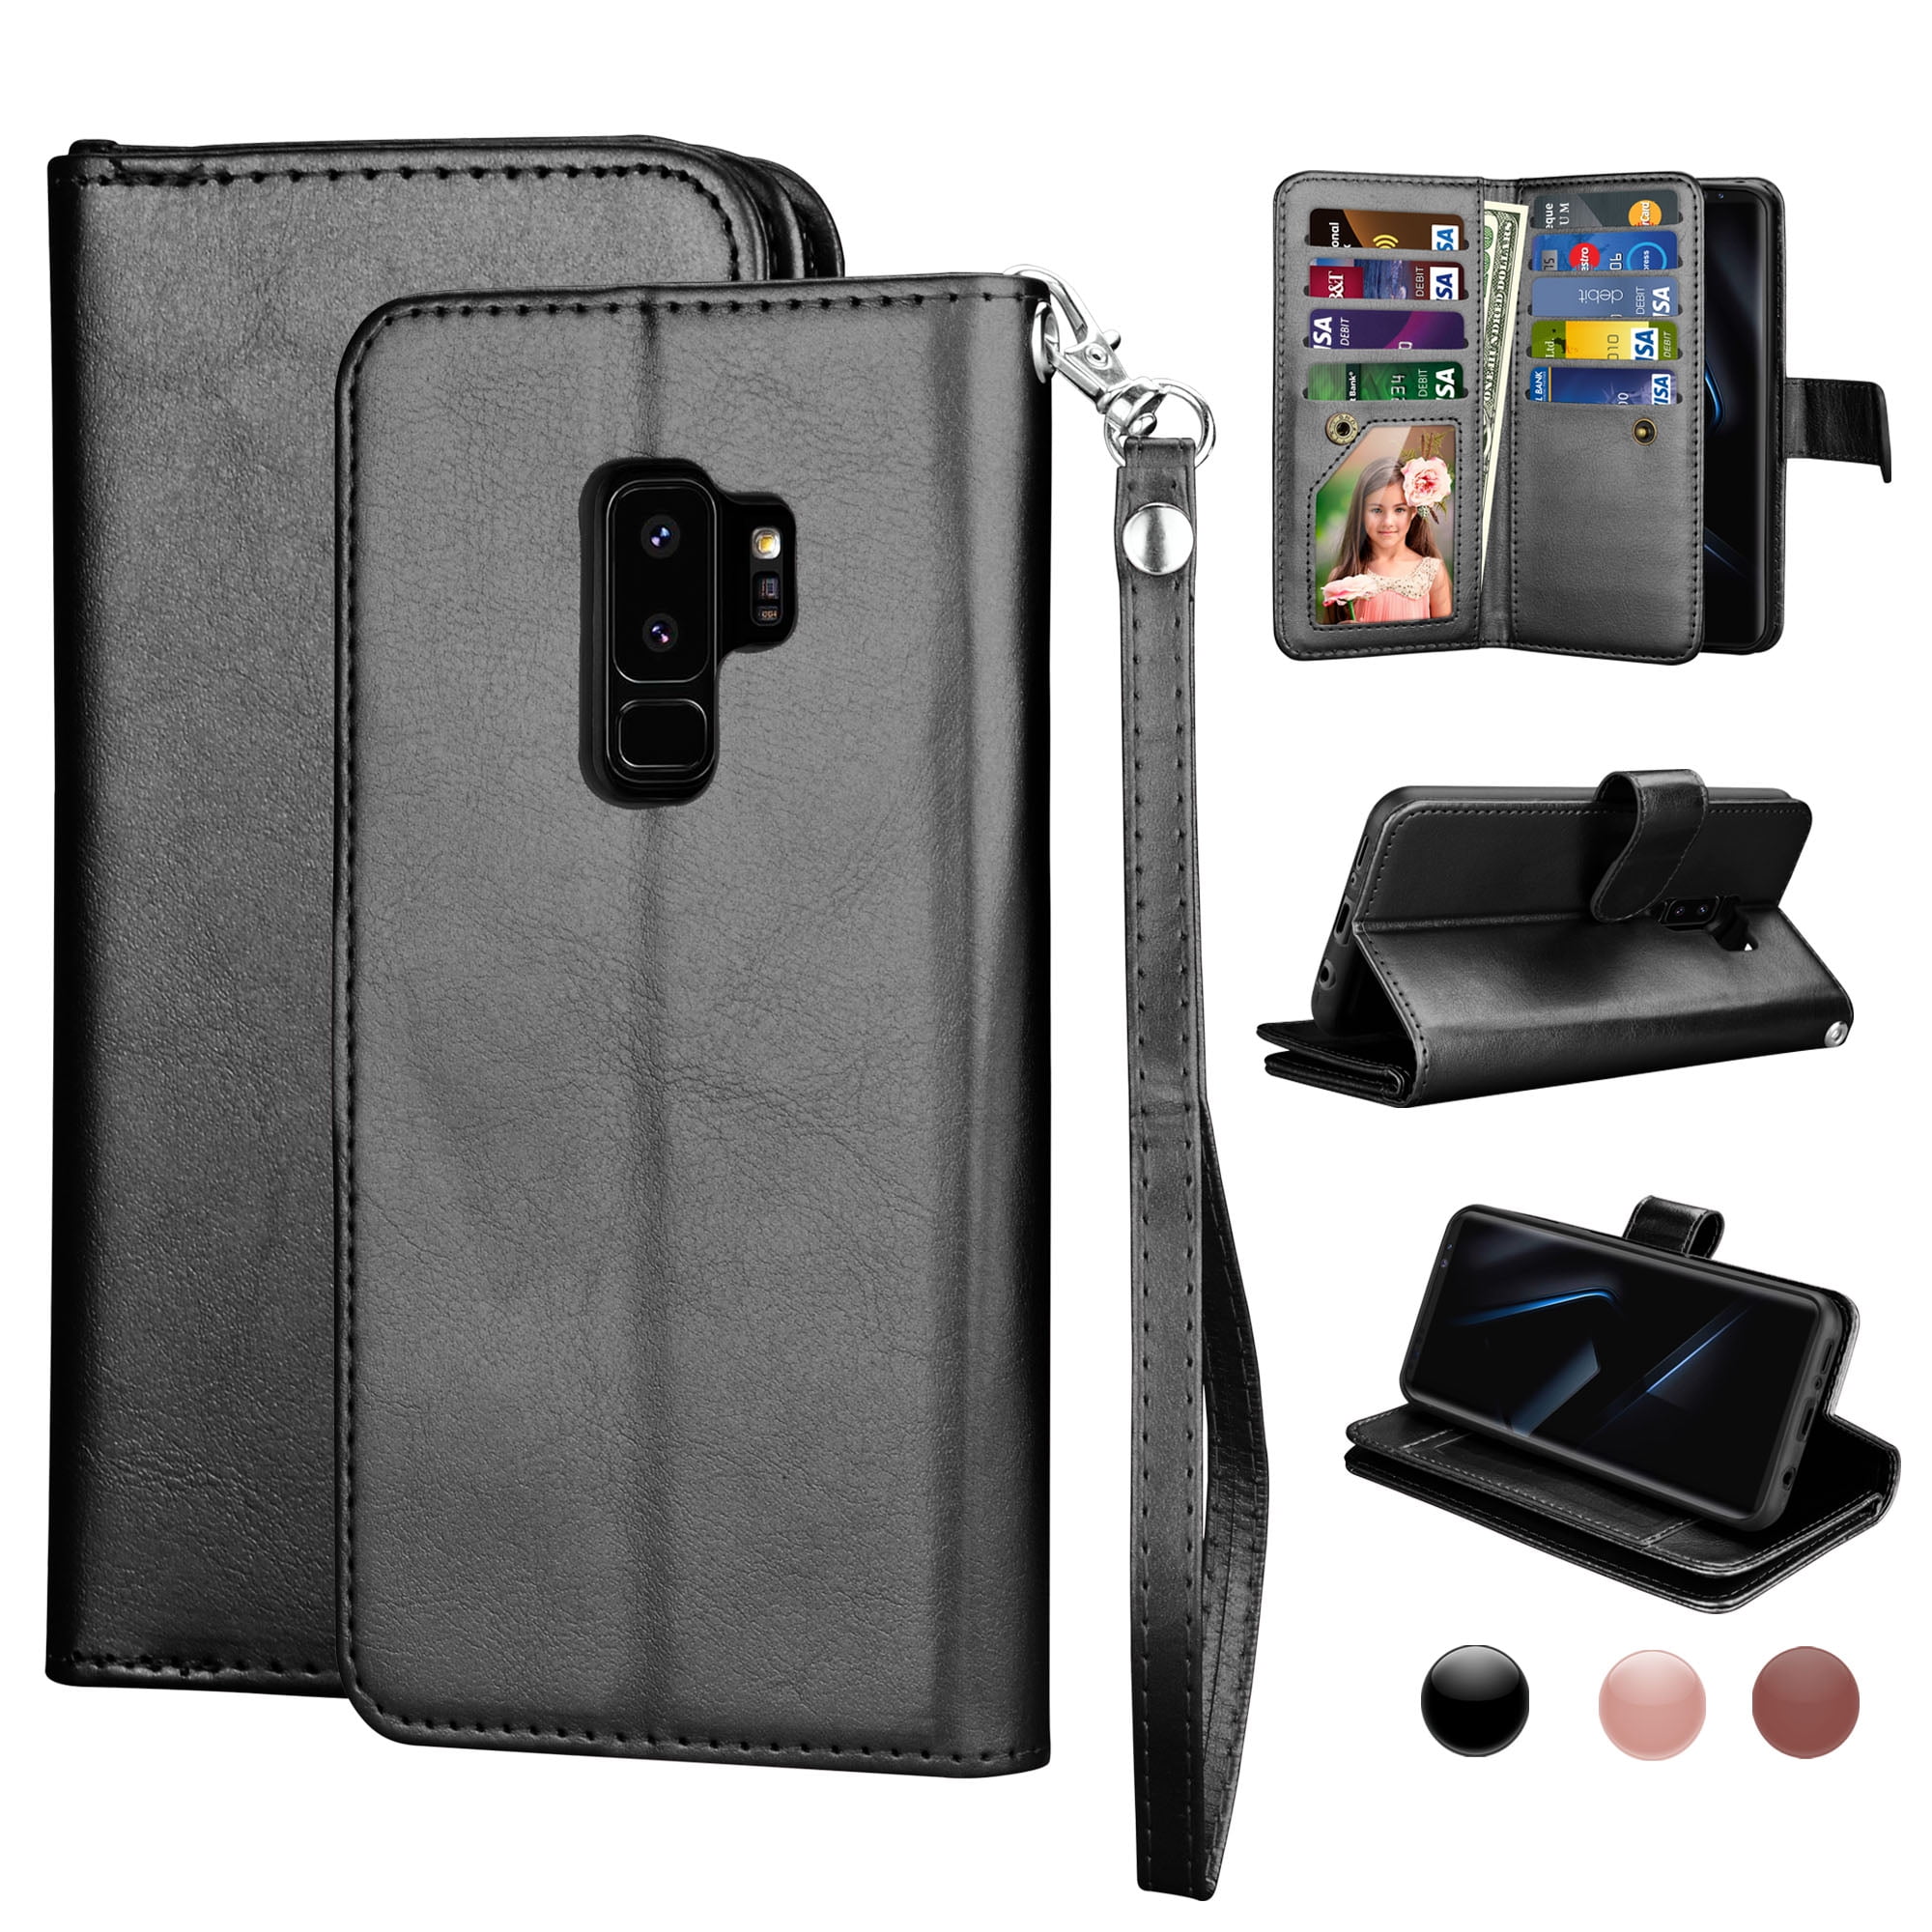 J7 J3 S9 Touchscreen Phone Shoulder Bag Wristlet Clutch For Galaxy S10 S10e S10 